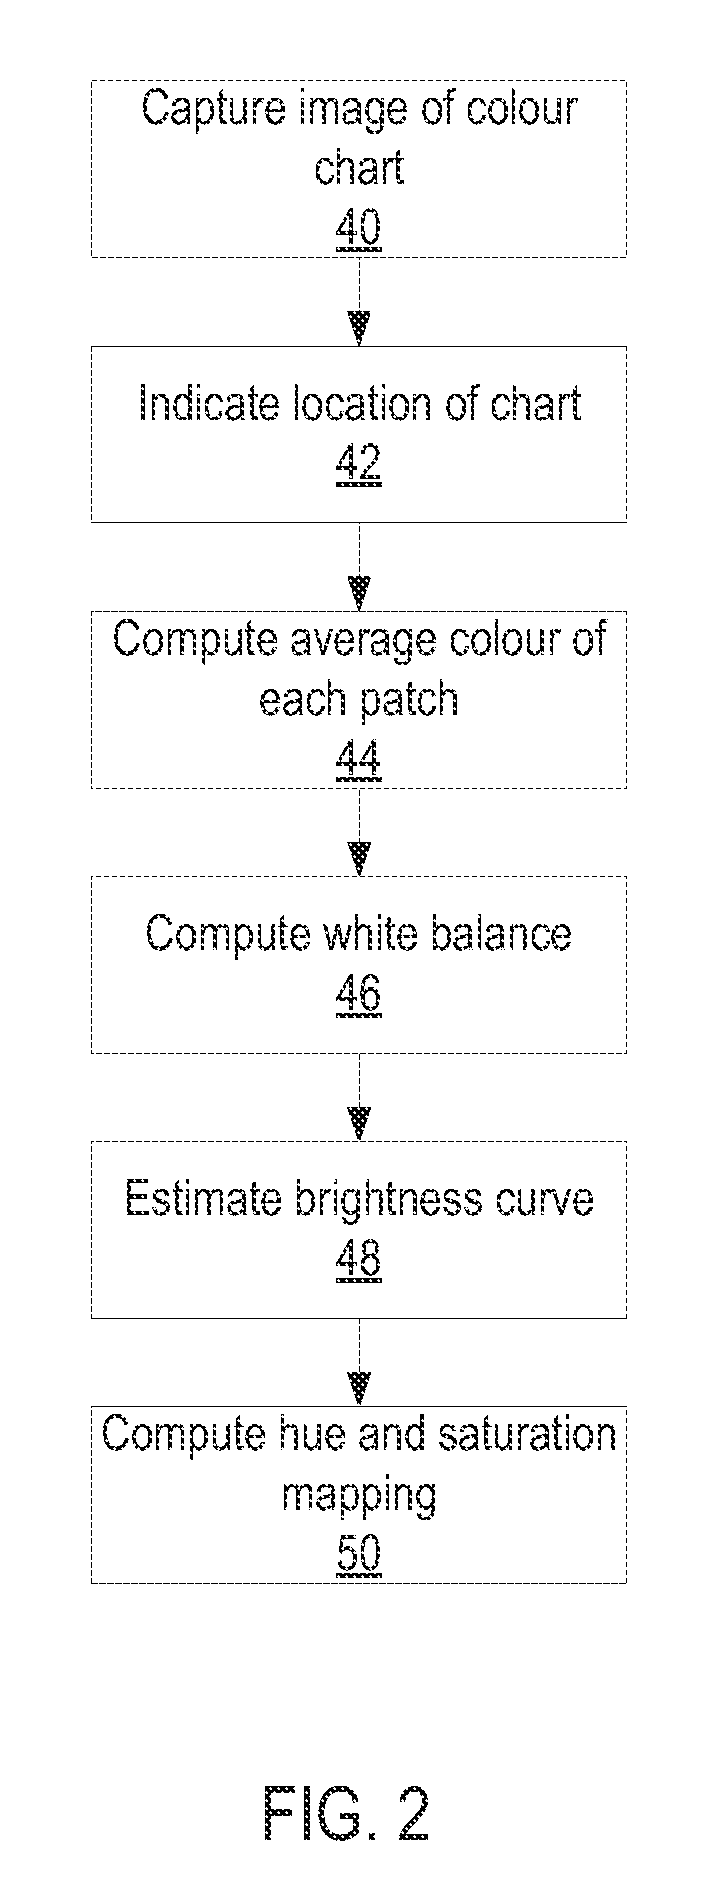 Colour calibration method for an image capture device